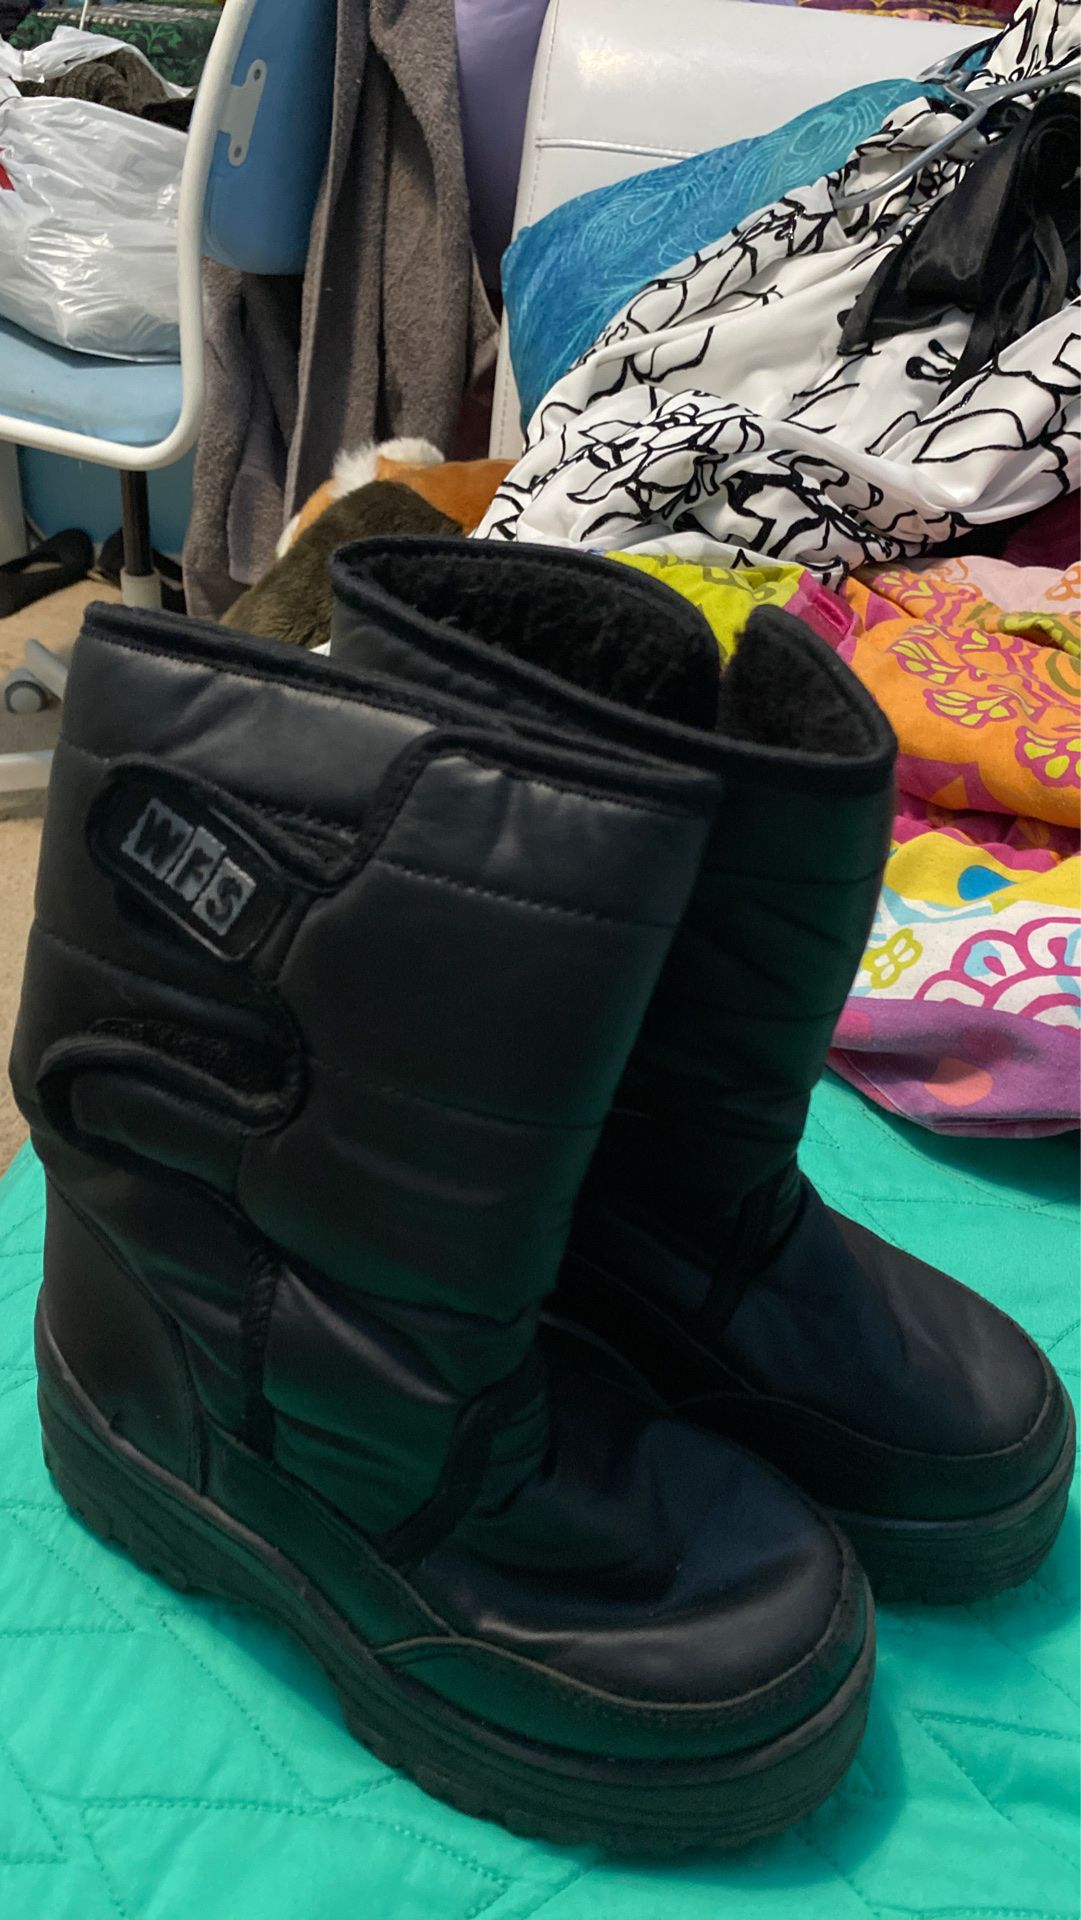 Snow boots kids size 1